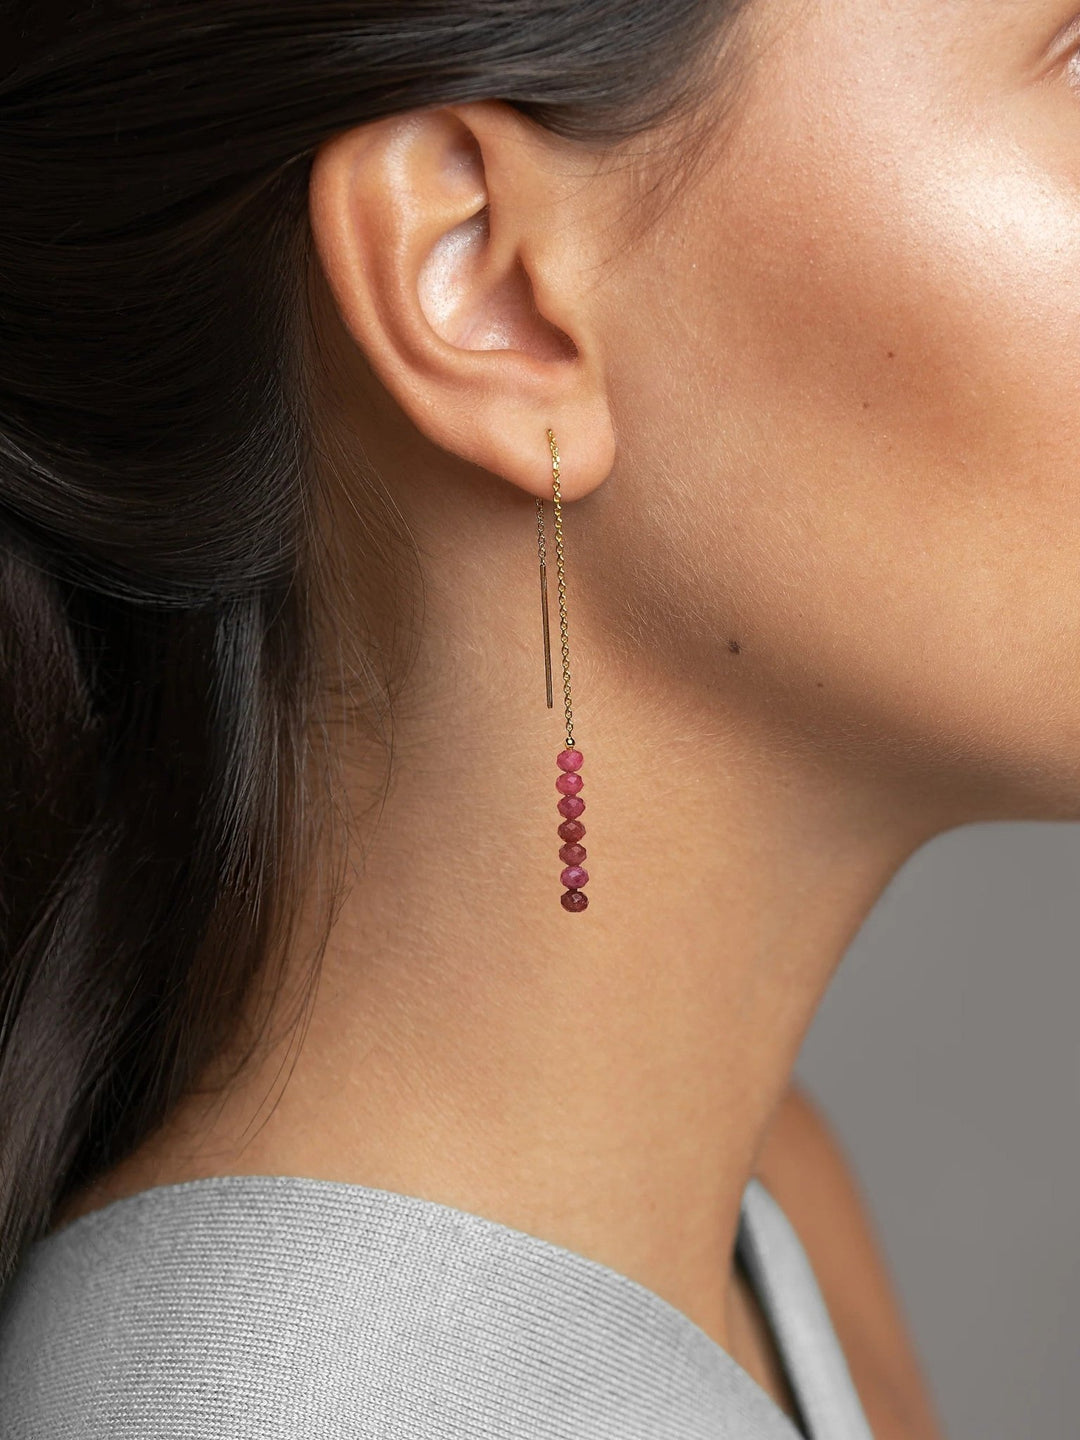 Luvia Stone Chain Earrings - 2. MultiTourmaline80MMchain earringscolorfull earringsLunai Jewelry